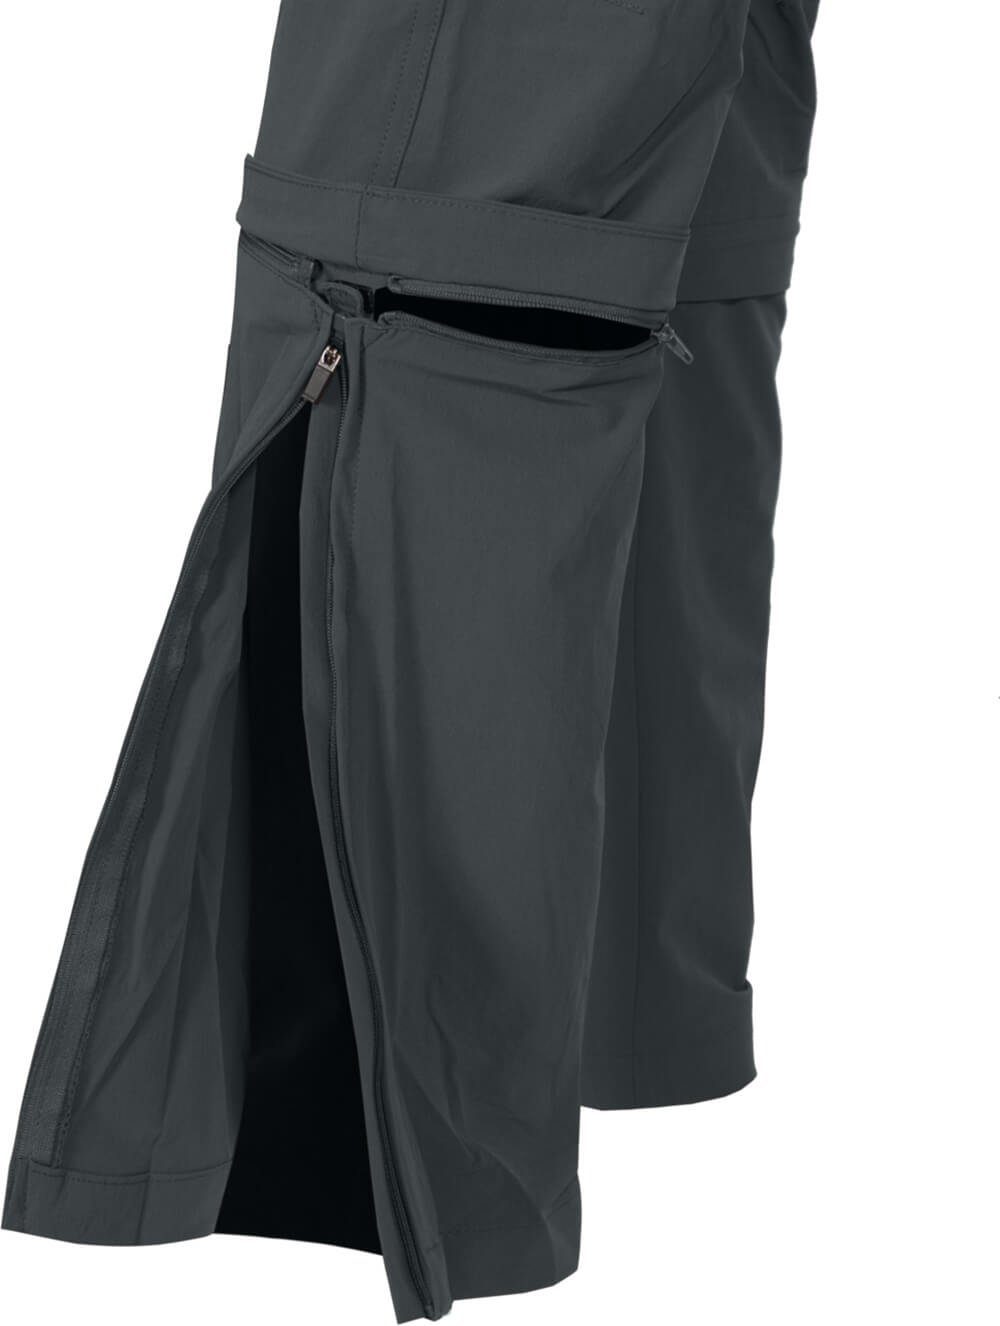 Bergson QUEENSLAND pflegeleicht, Normalgrößen, Doppel dunkel grau mit Zipp-Off Herren Zip-off-Hose Wanderhose, vielseitig, T-ZIPP